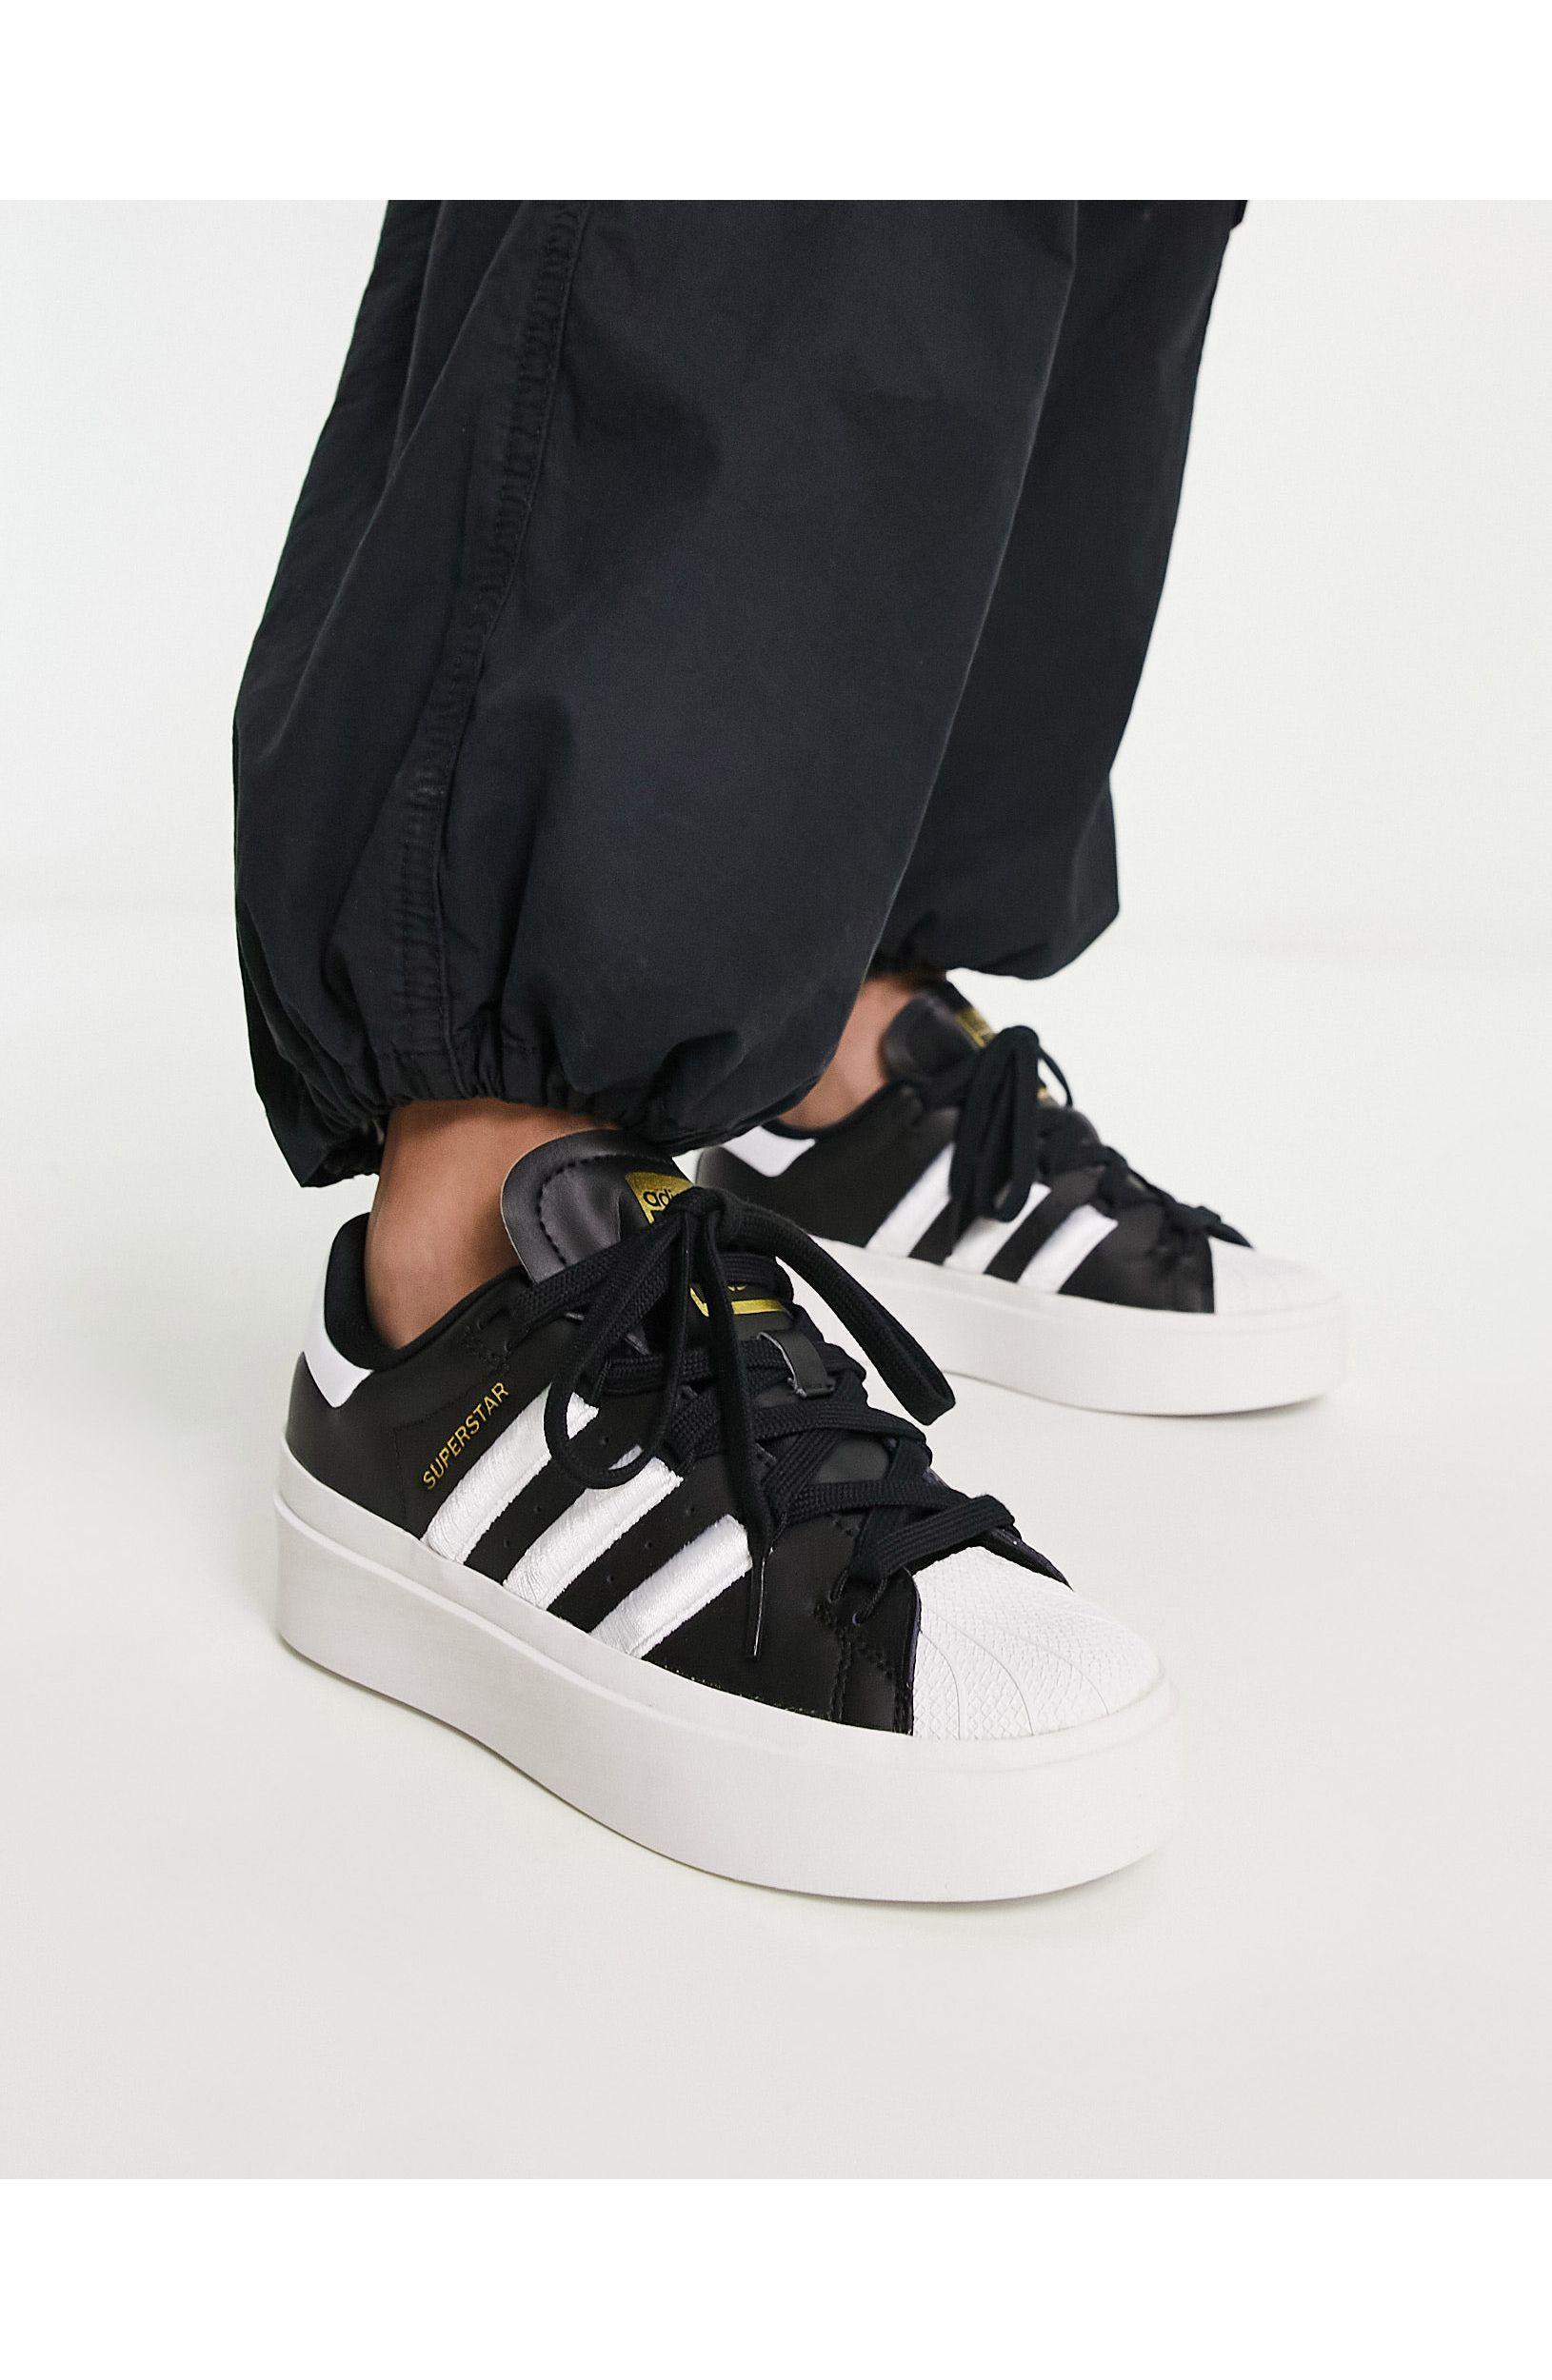 Adidas Originals Superstar Bonega Sneakers In Black And White | lupon ...